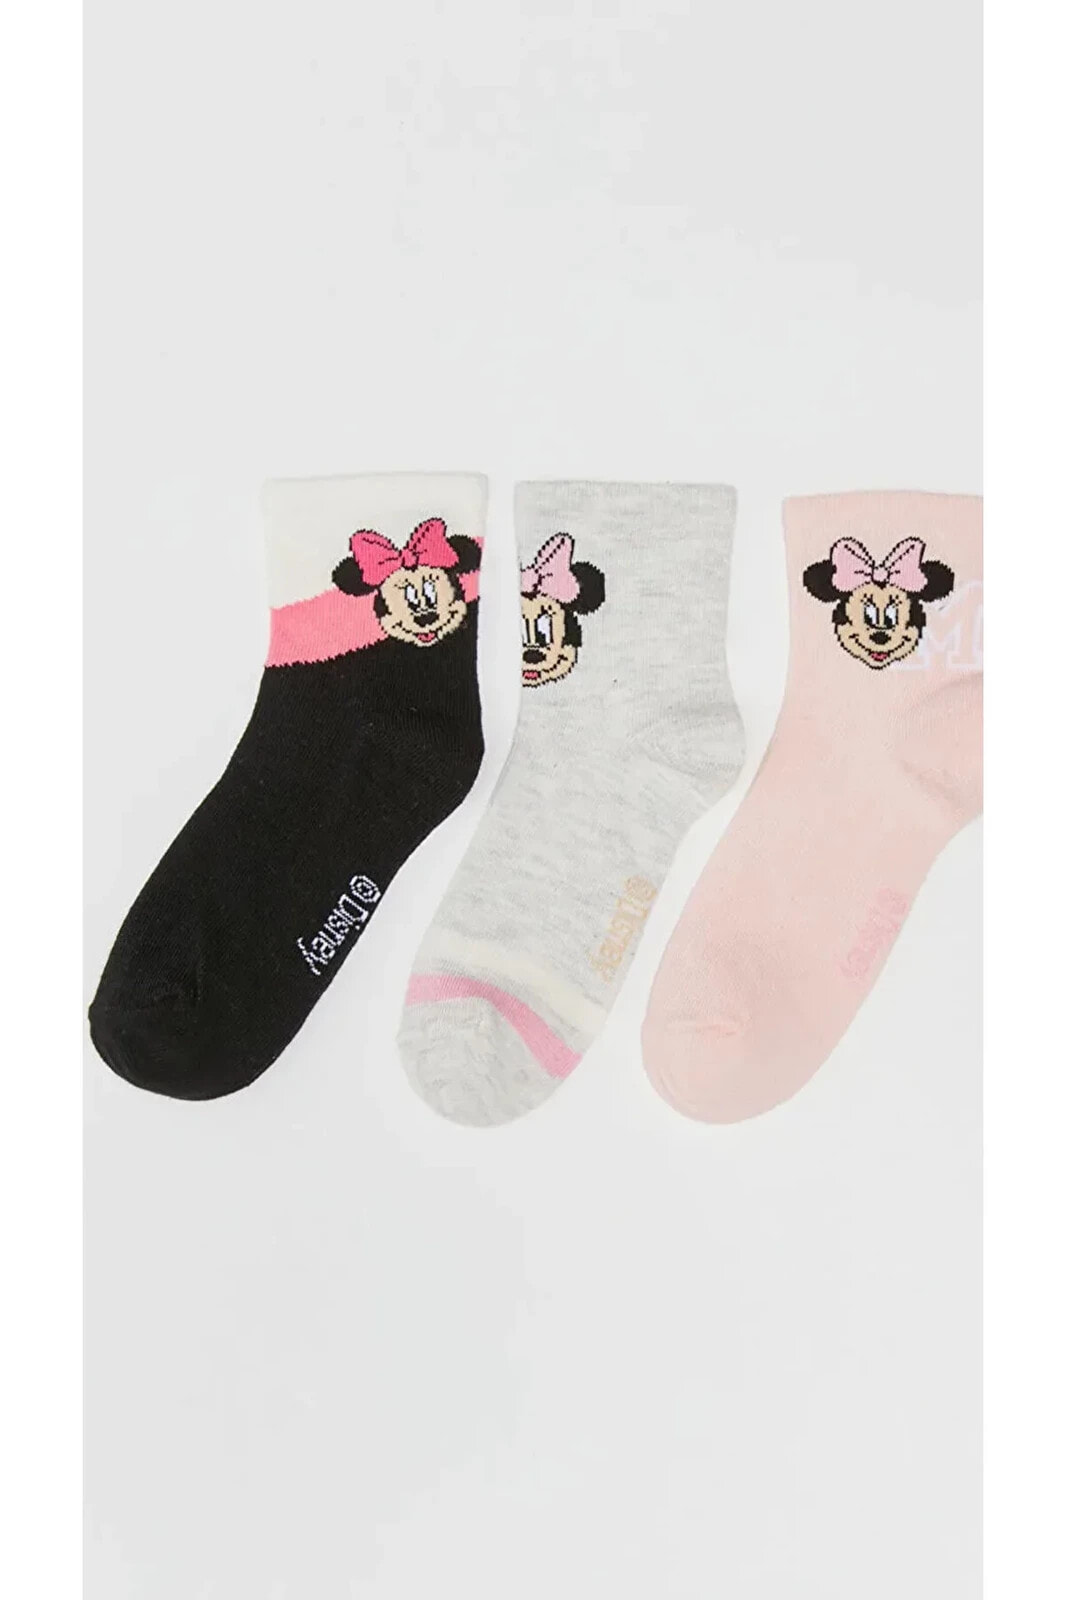 Minnie Mouse Desenli Kız Çocuk Soket Çorap 3'lü